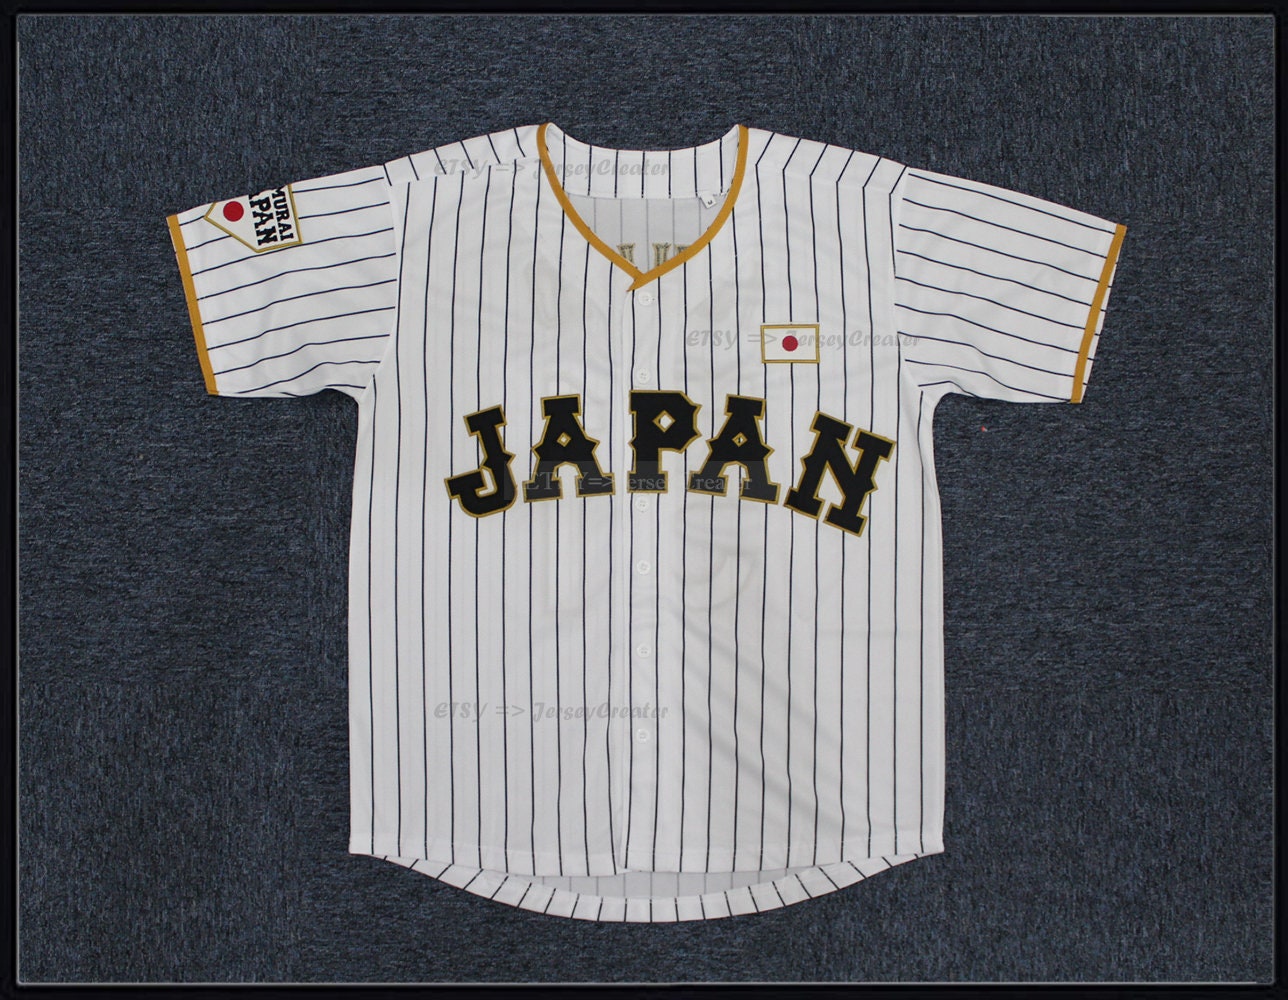 suzuki baseball jersey